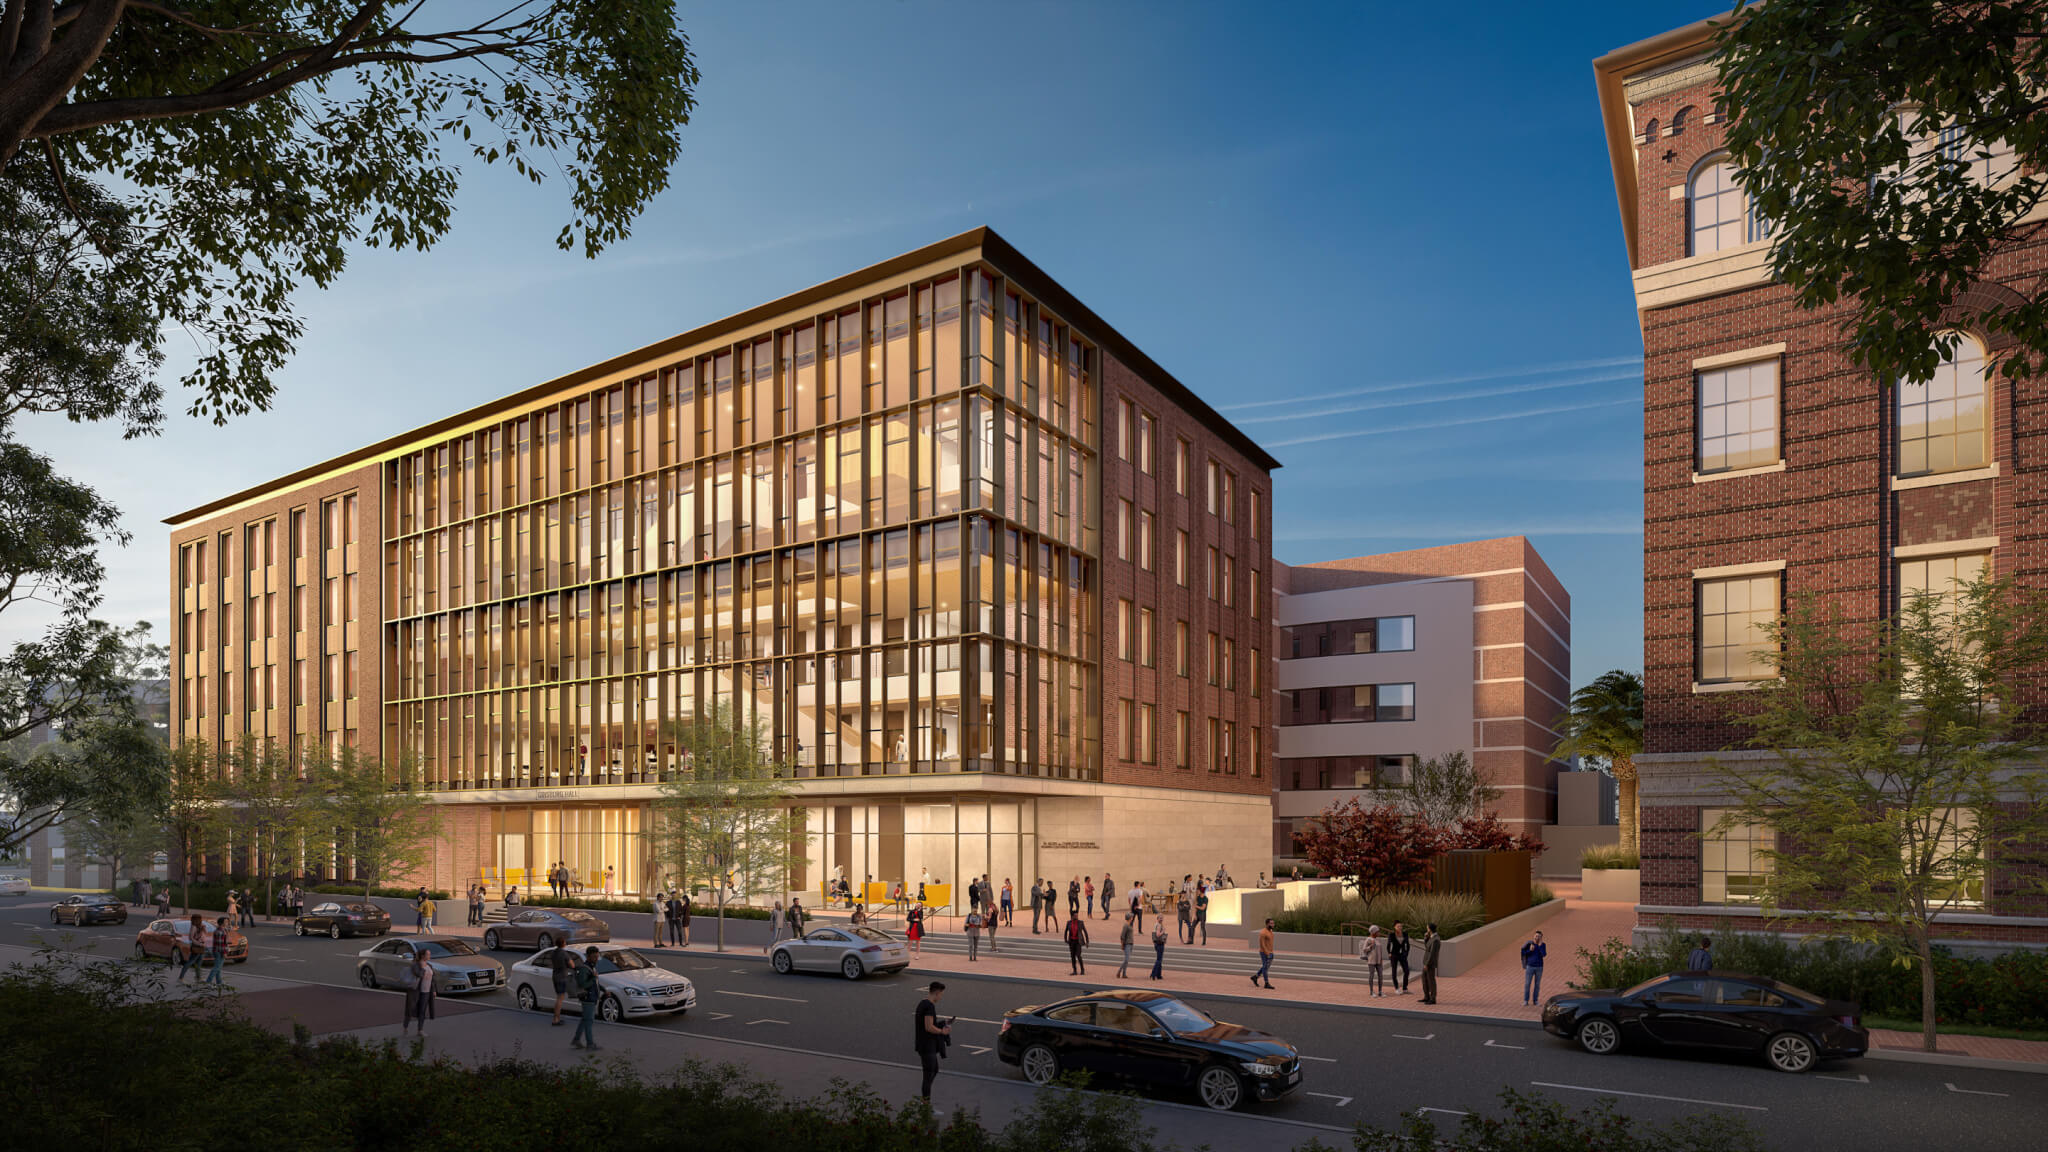 rendering of an academic building